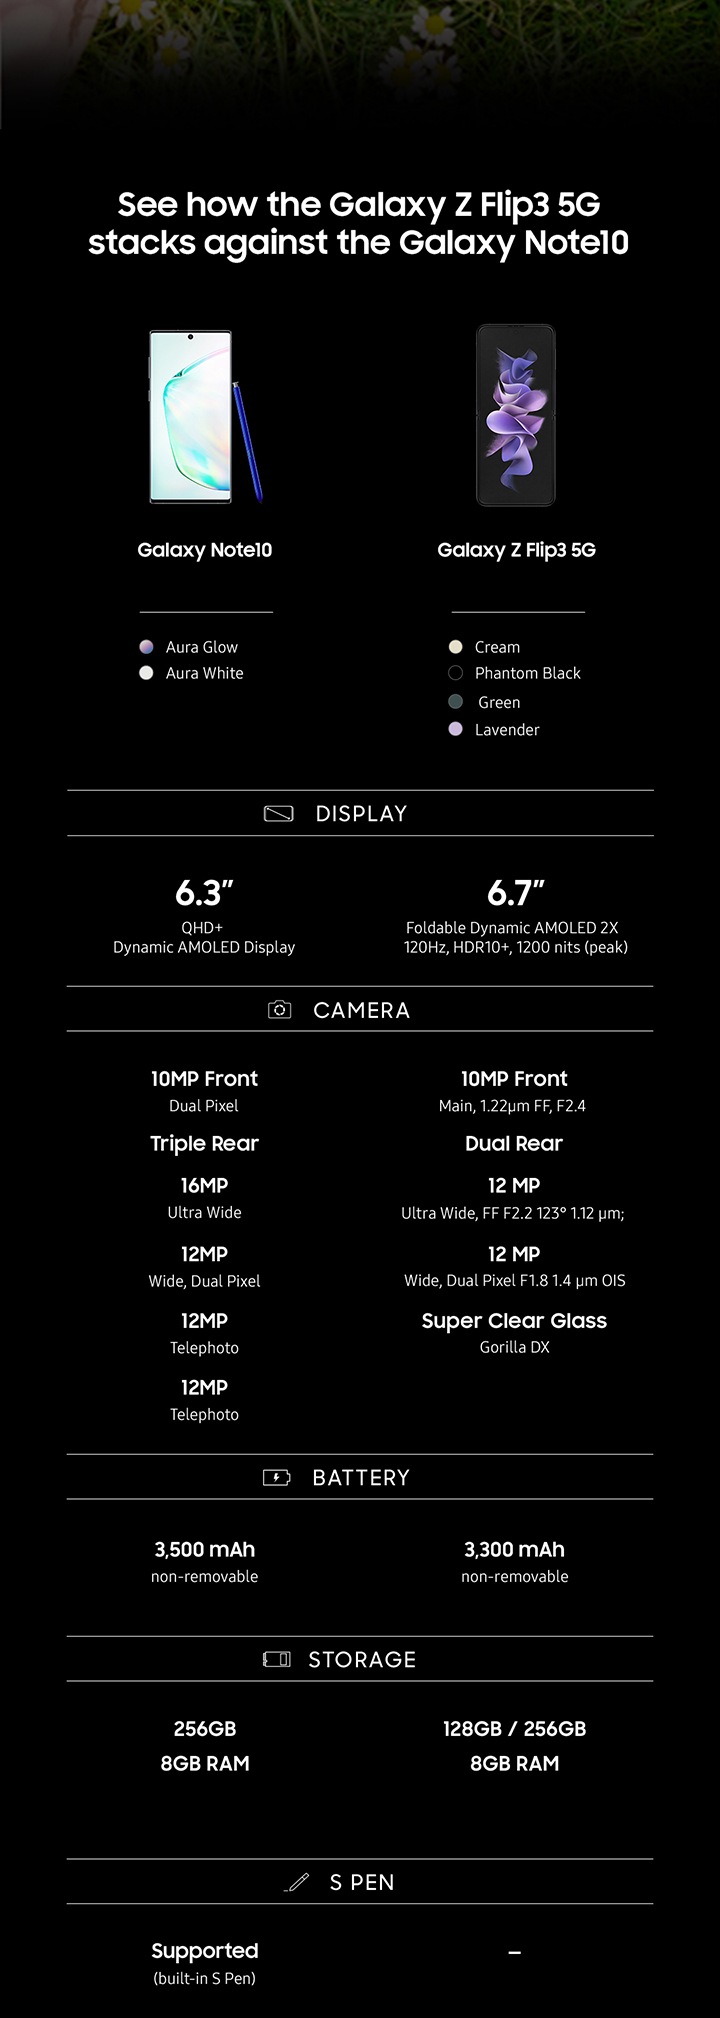 Galaxy Note9 vs Galaxy Z Flip3 5G